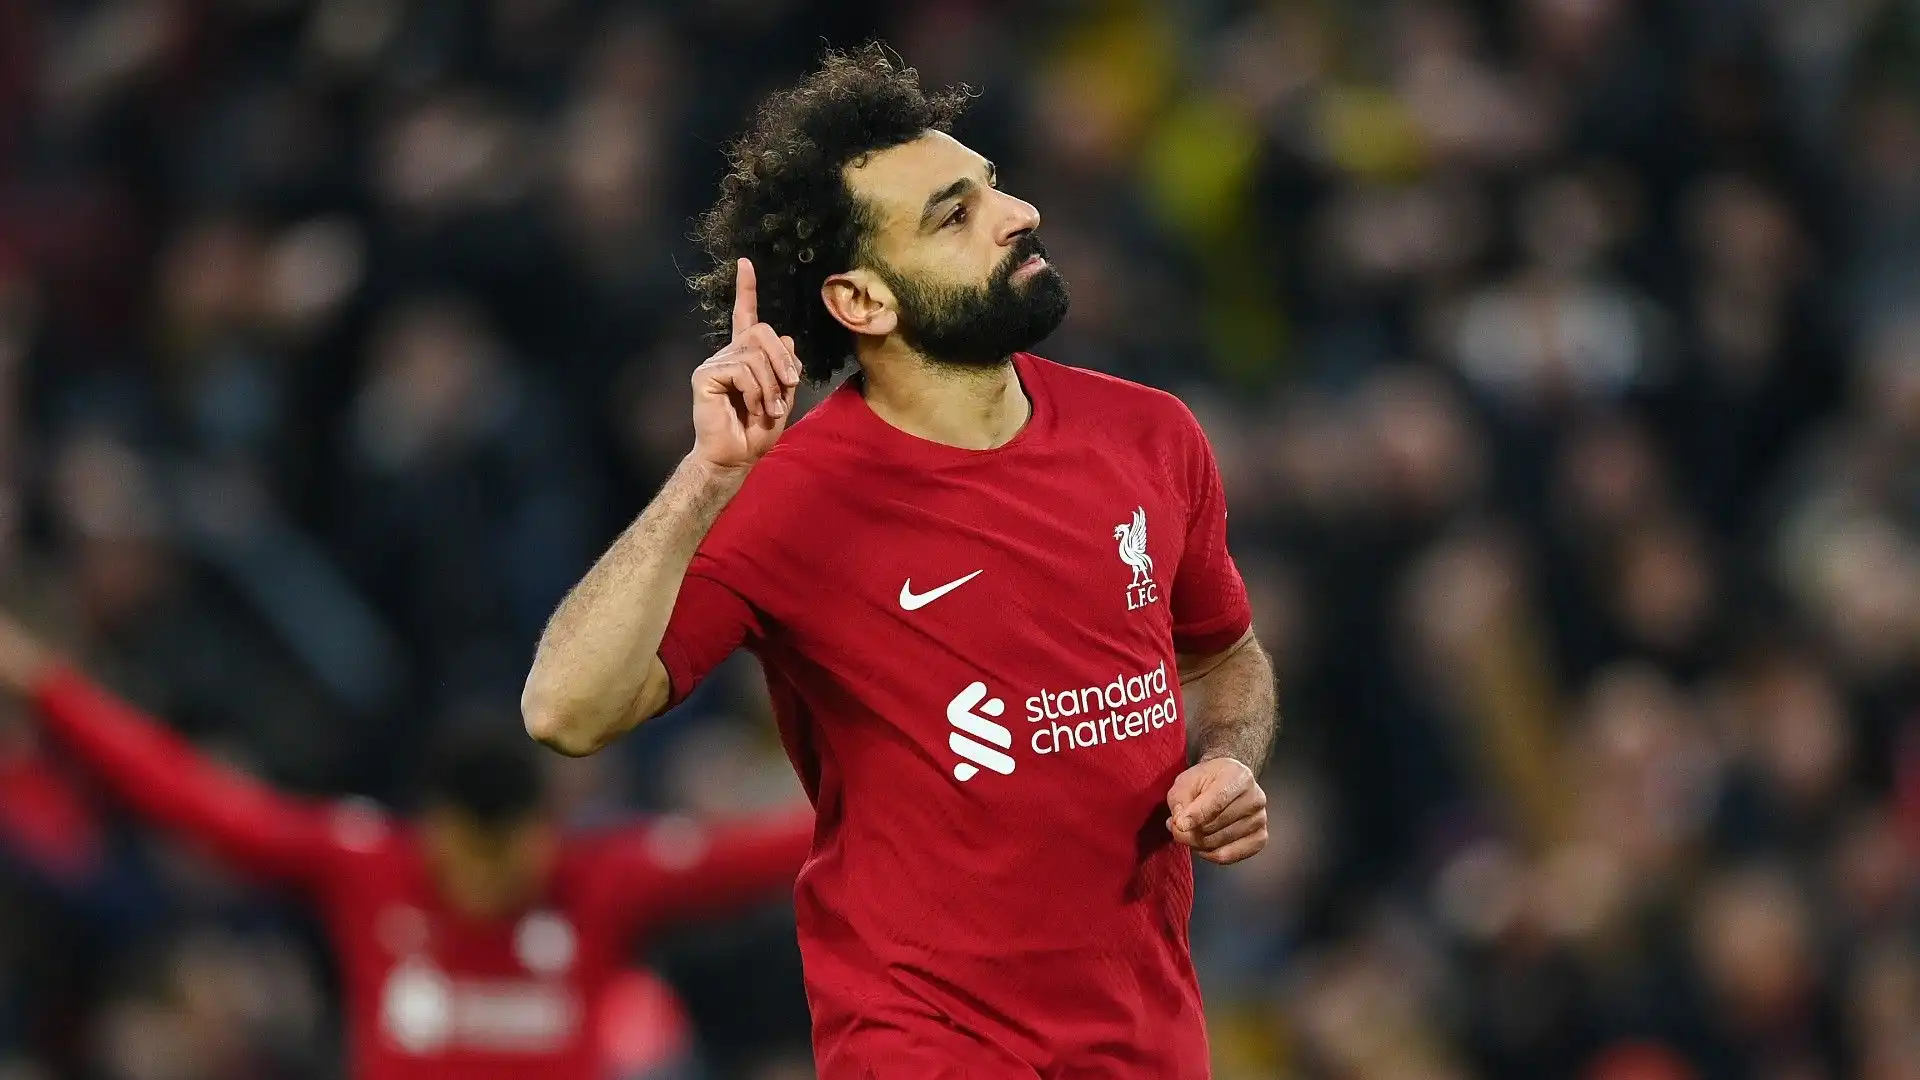 7- La stella del Liverpool Salah percepisce ben 53 milioni di dollari l'anno